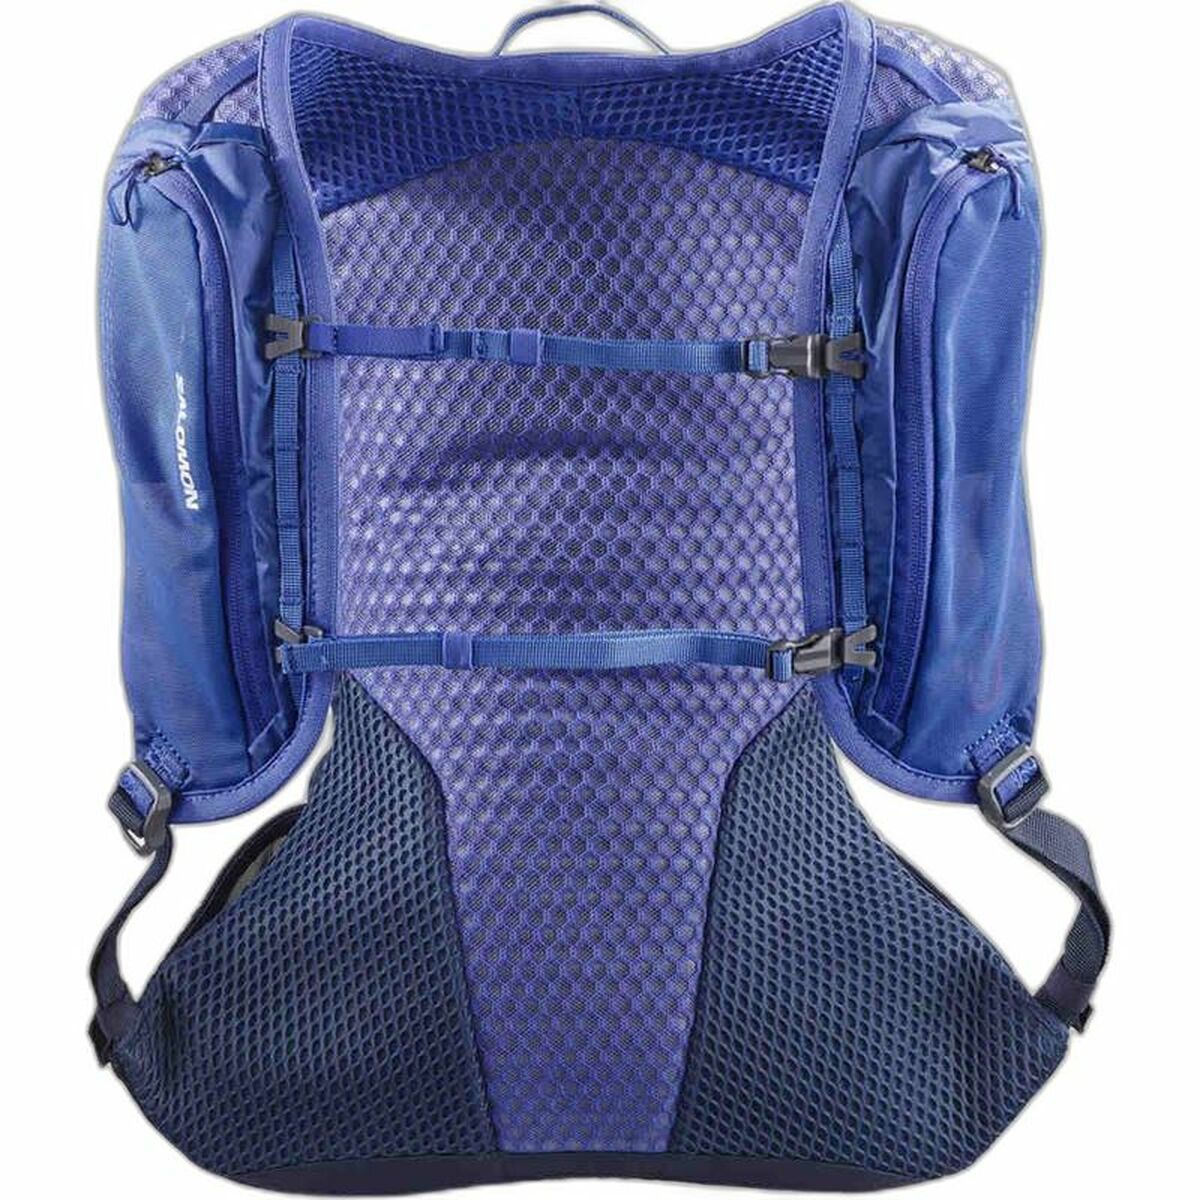 Hiking Backpack Salomon XT 10 Blue